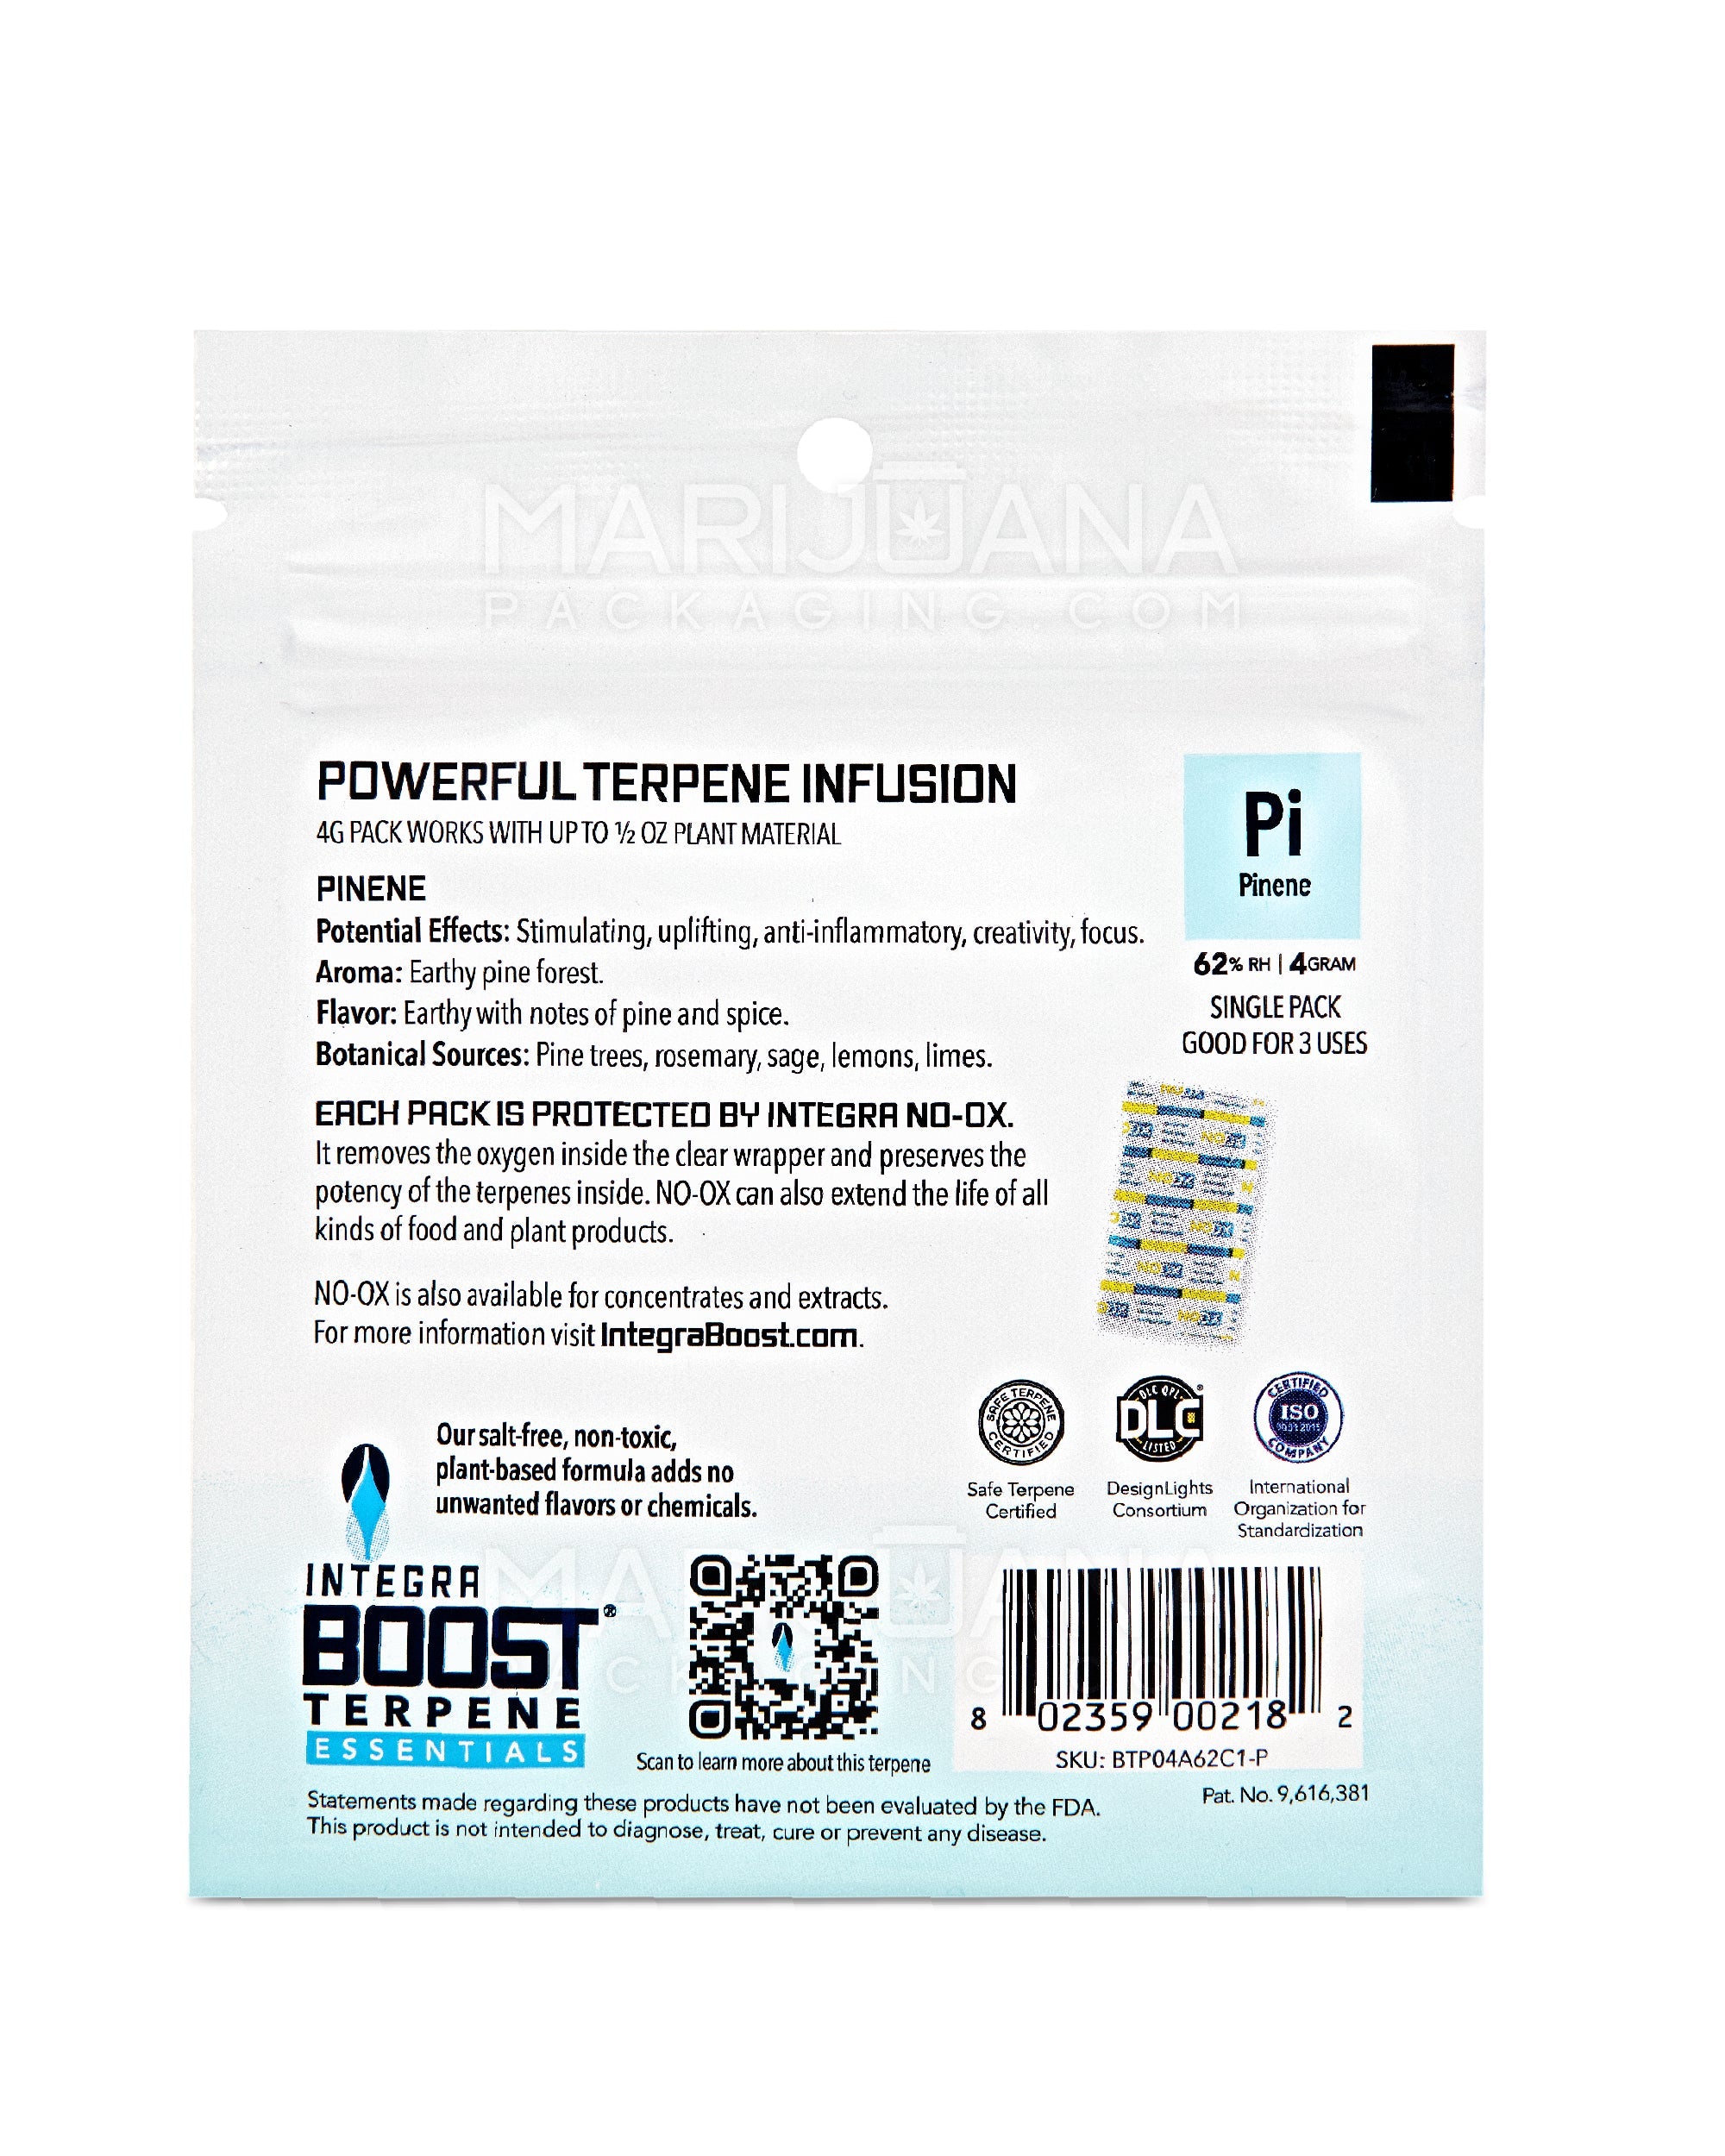 INTEGRA Boost Terpene Essentials Pinene Humidity Pack | 4 Grams - 62% | Sample - 2